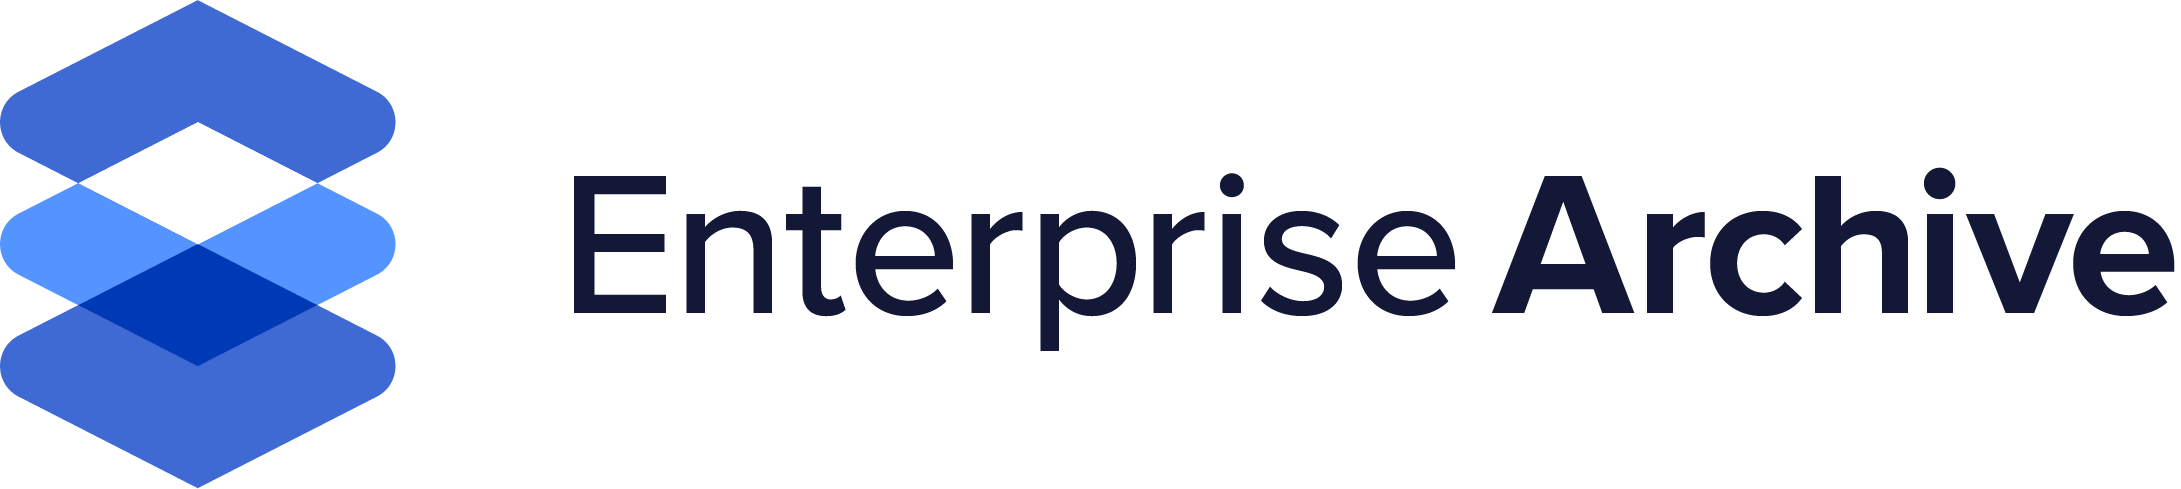 Enterprise Archive logo